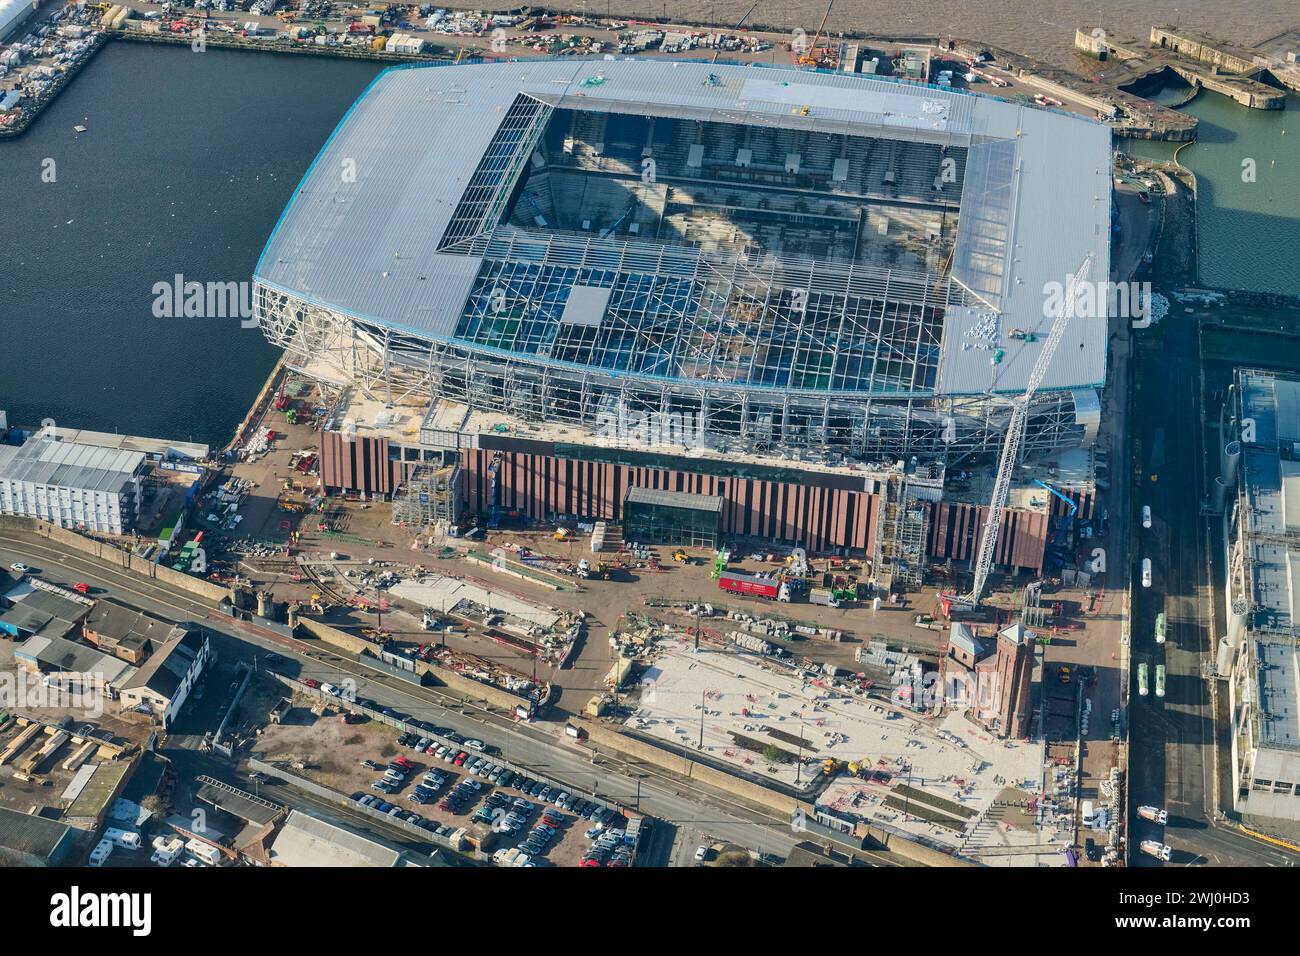 Le stade du New Everton Football Club à Bramley Moore Dock, Merseyside, Liverpool, Nord-Ouest de l'Angleterre, Royaume-Uni, en construction Banque D'Images